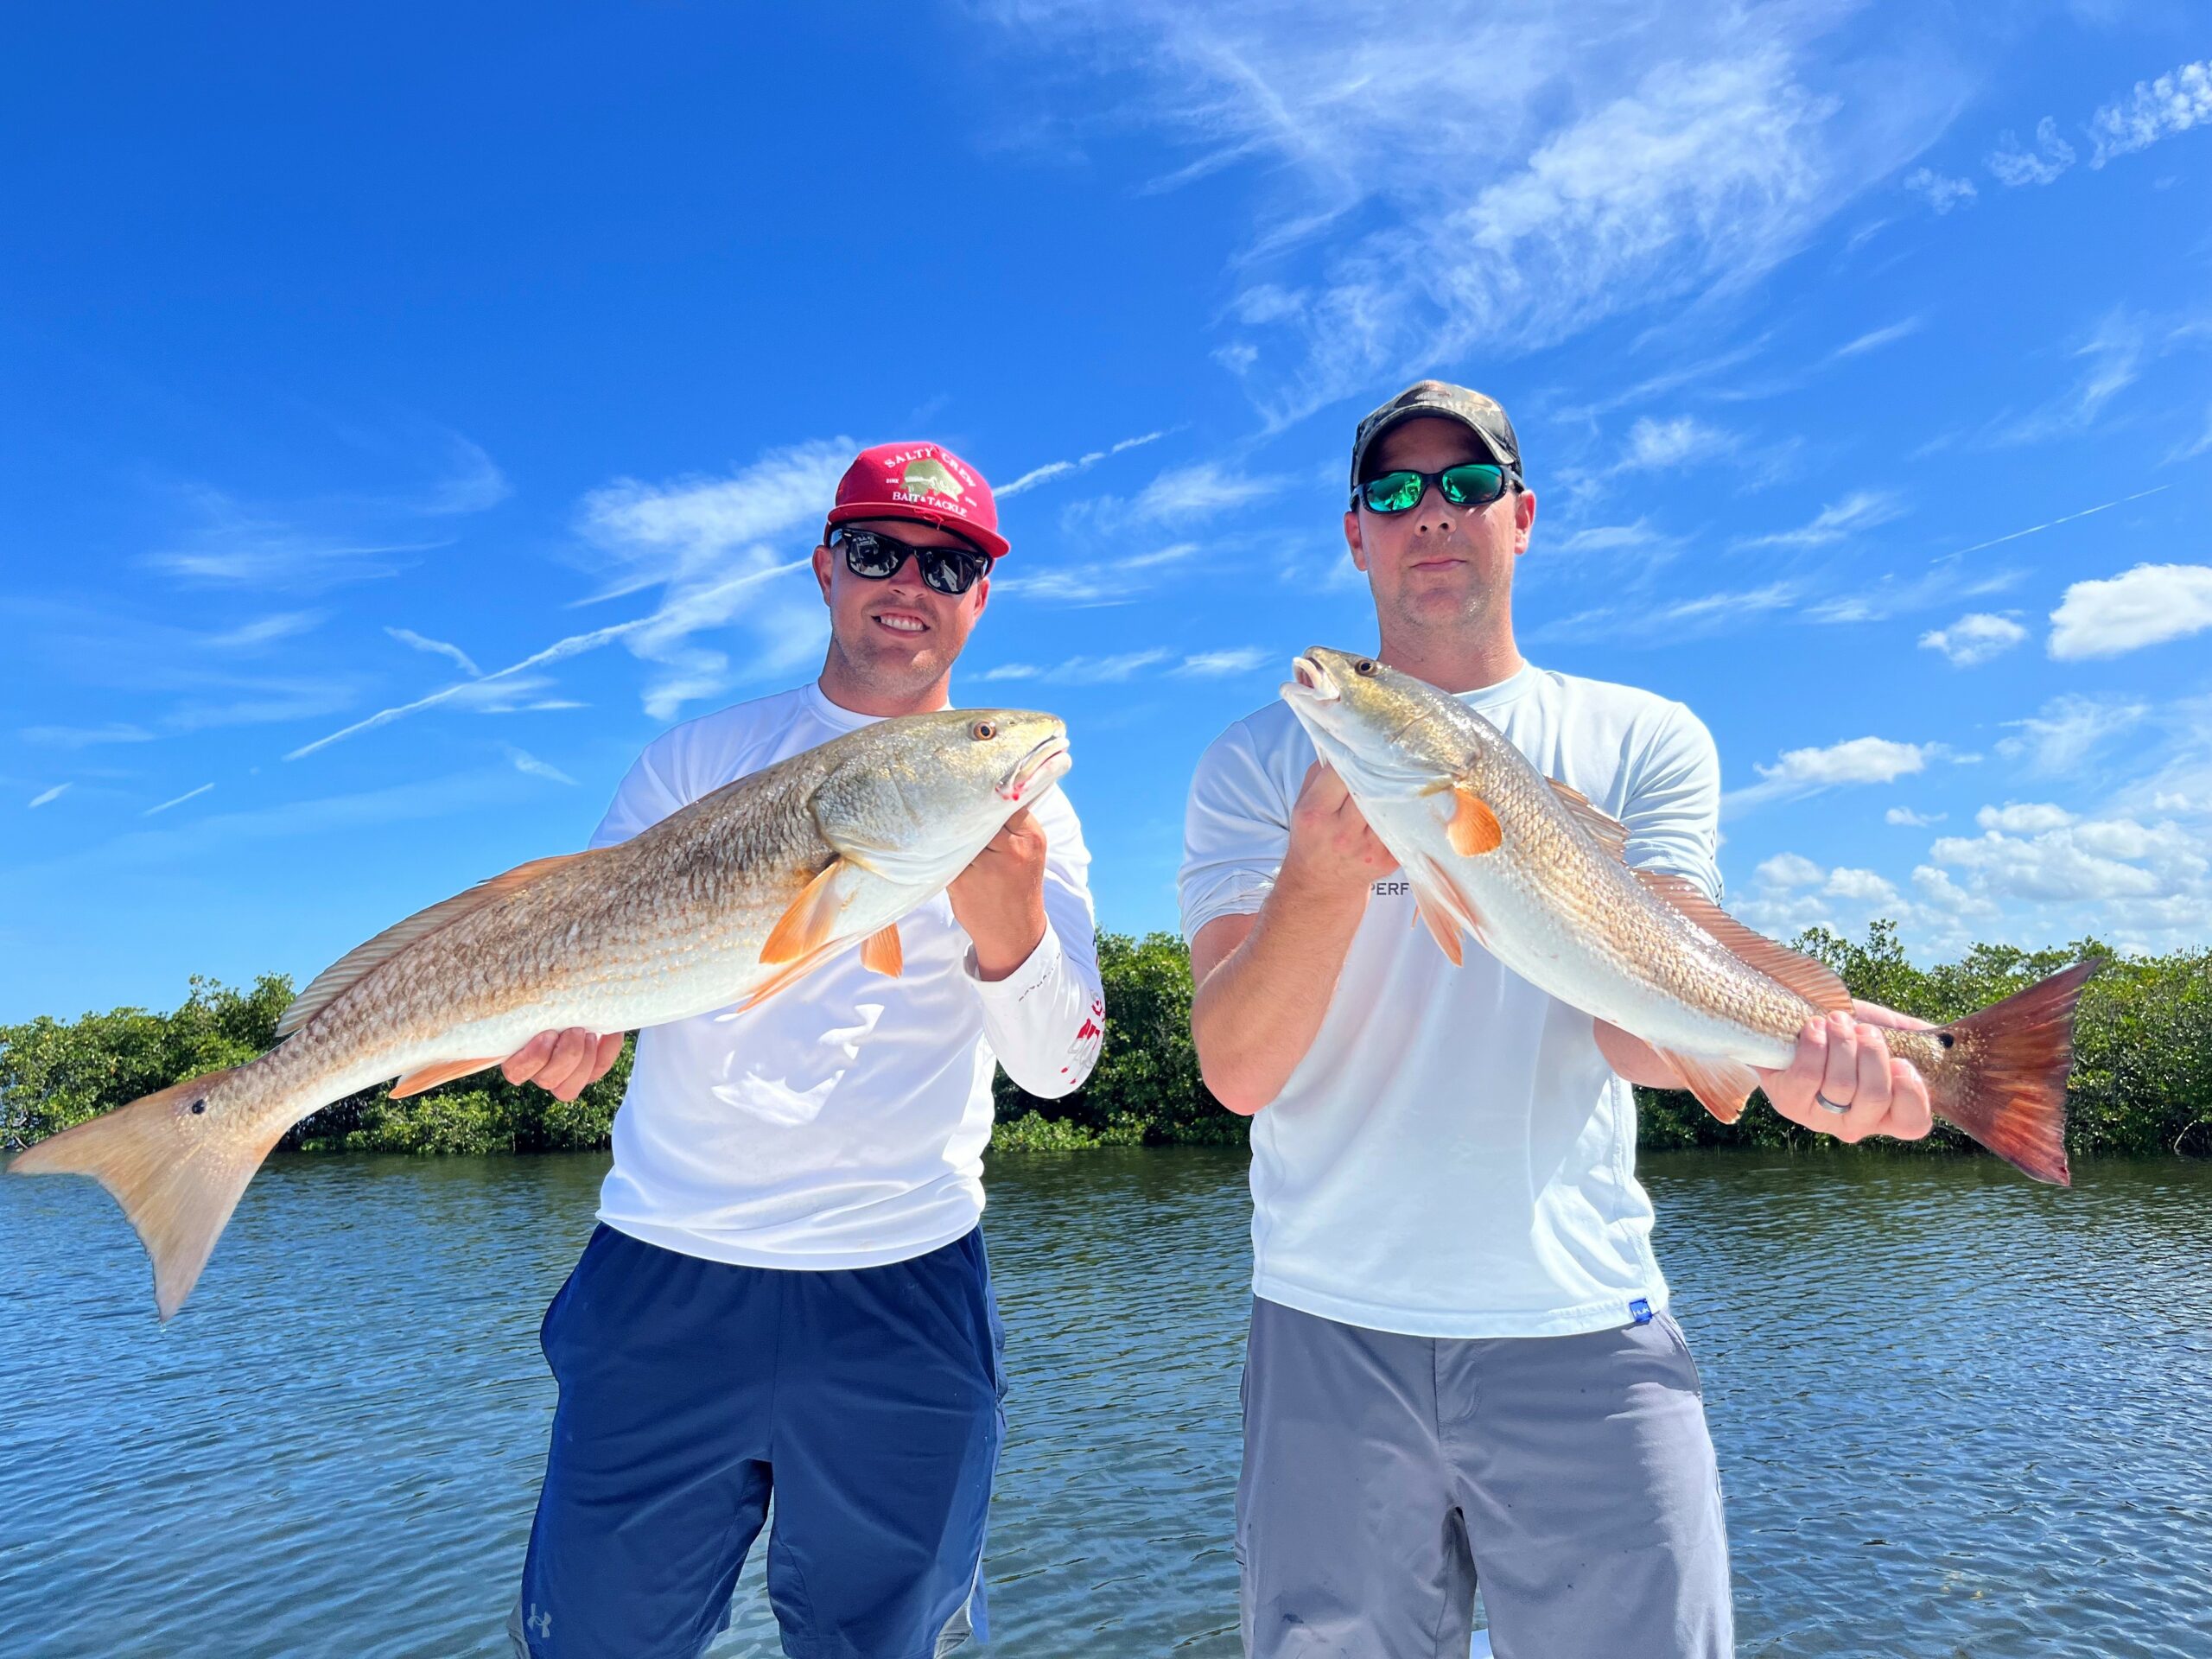 Fishing - Florida's Adventure Coast